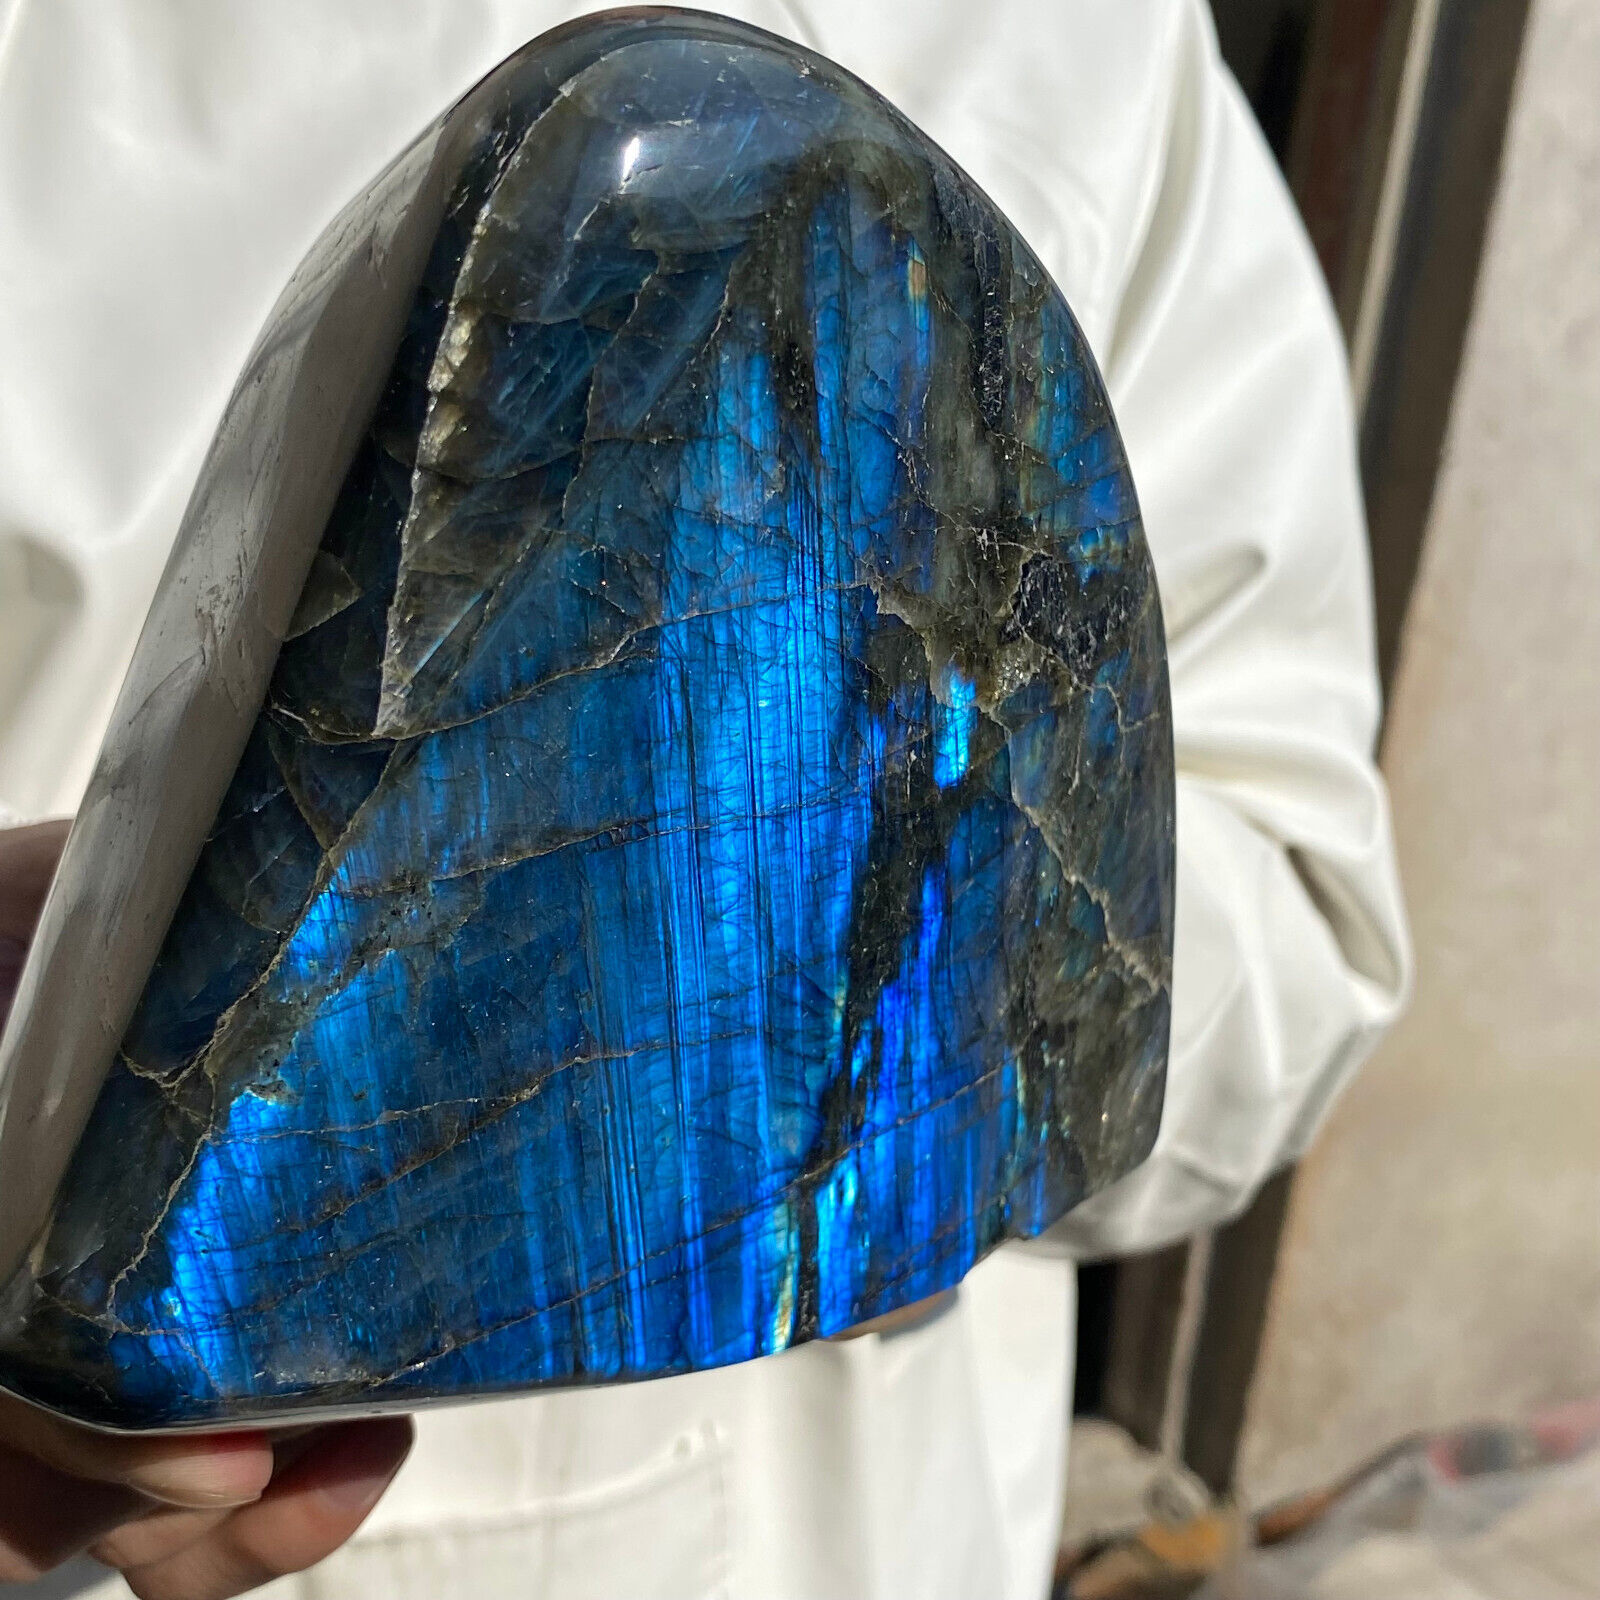 5.3lb Large Natural Labradorite Quartz Crystal Display Mineral Specimen Healing